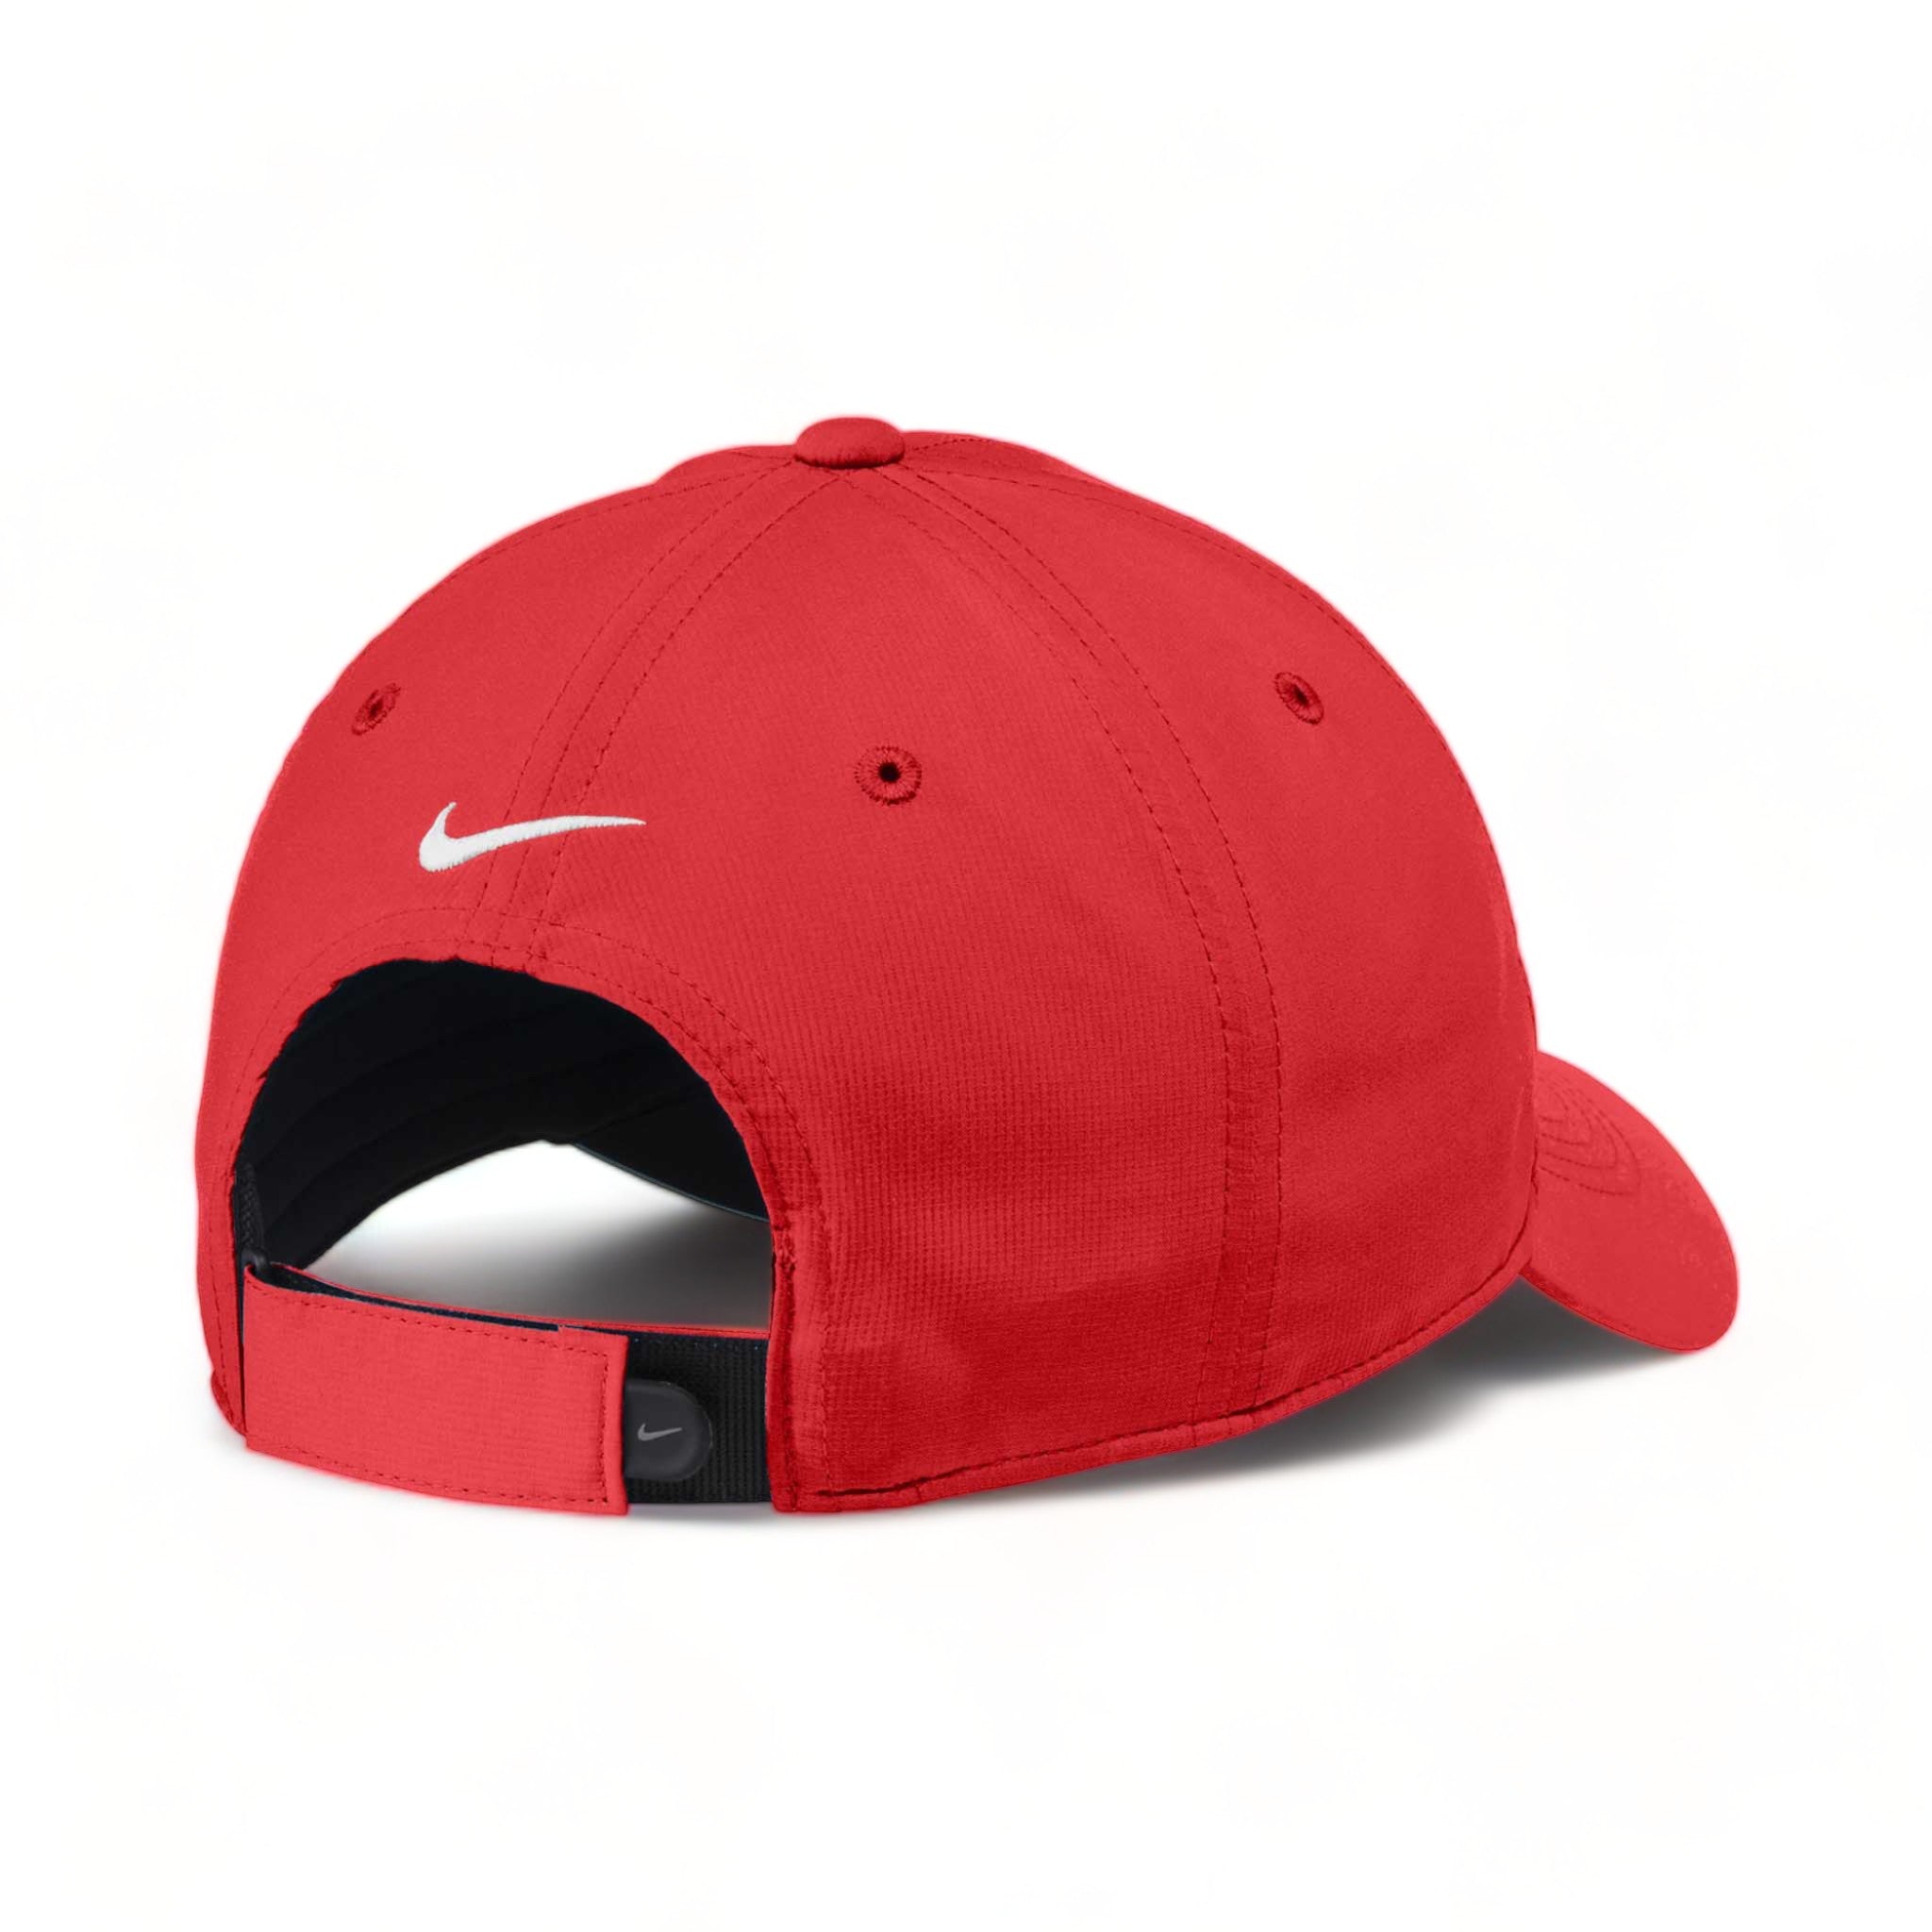 Back view of Nike NKFB6444 custom hat in university red